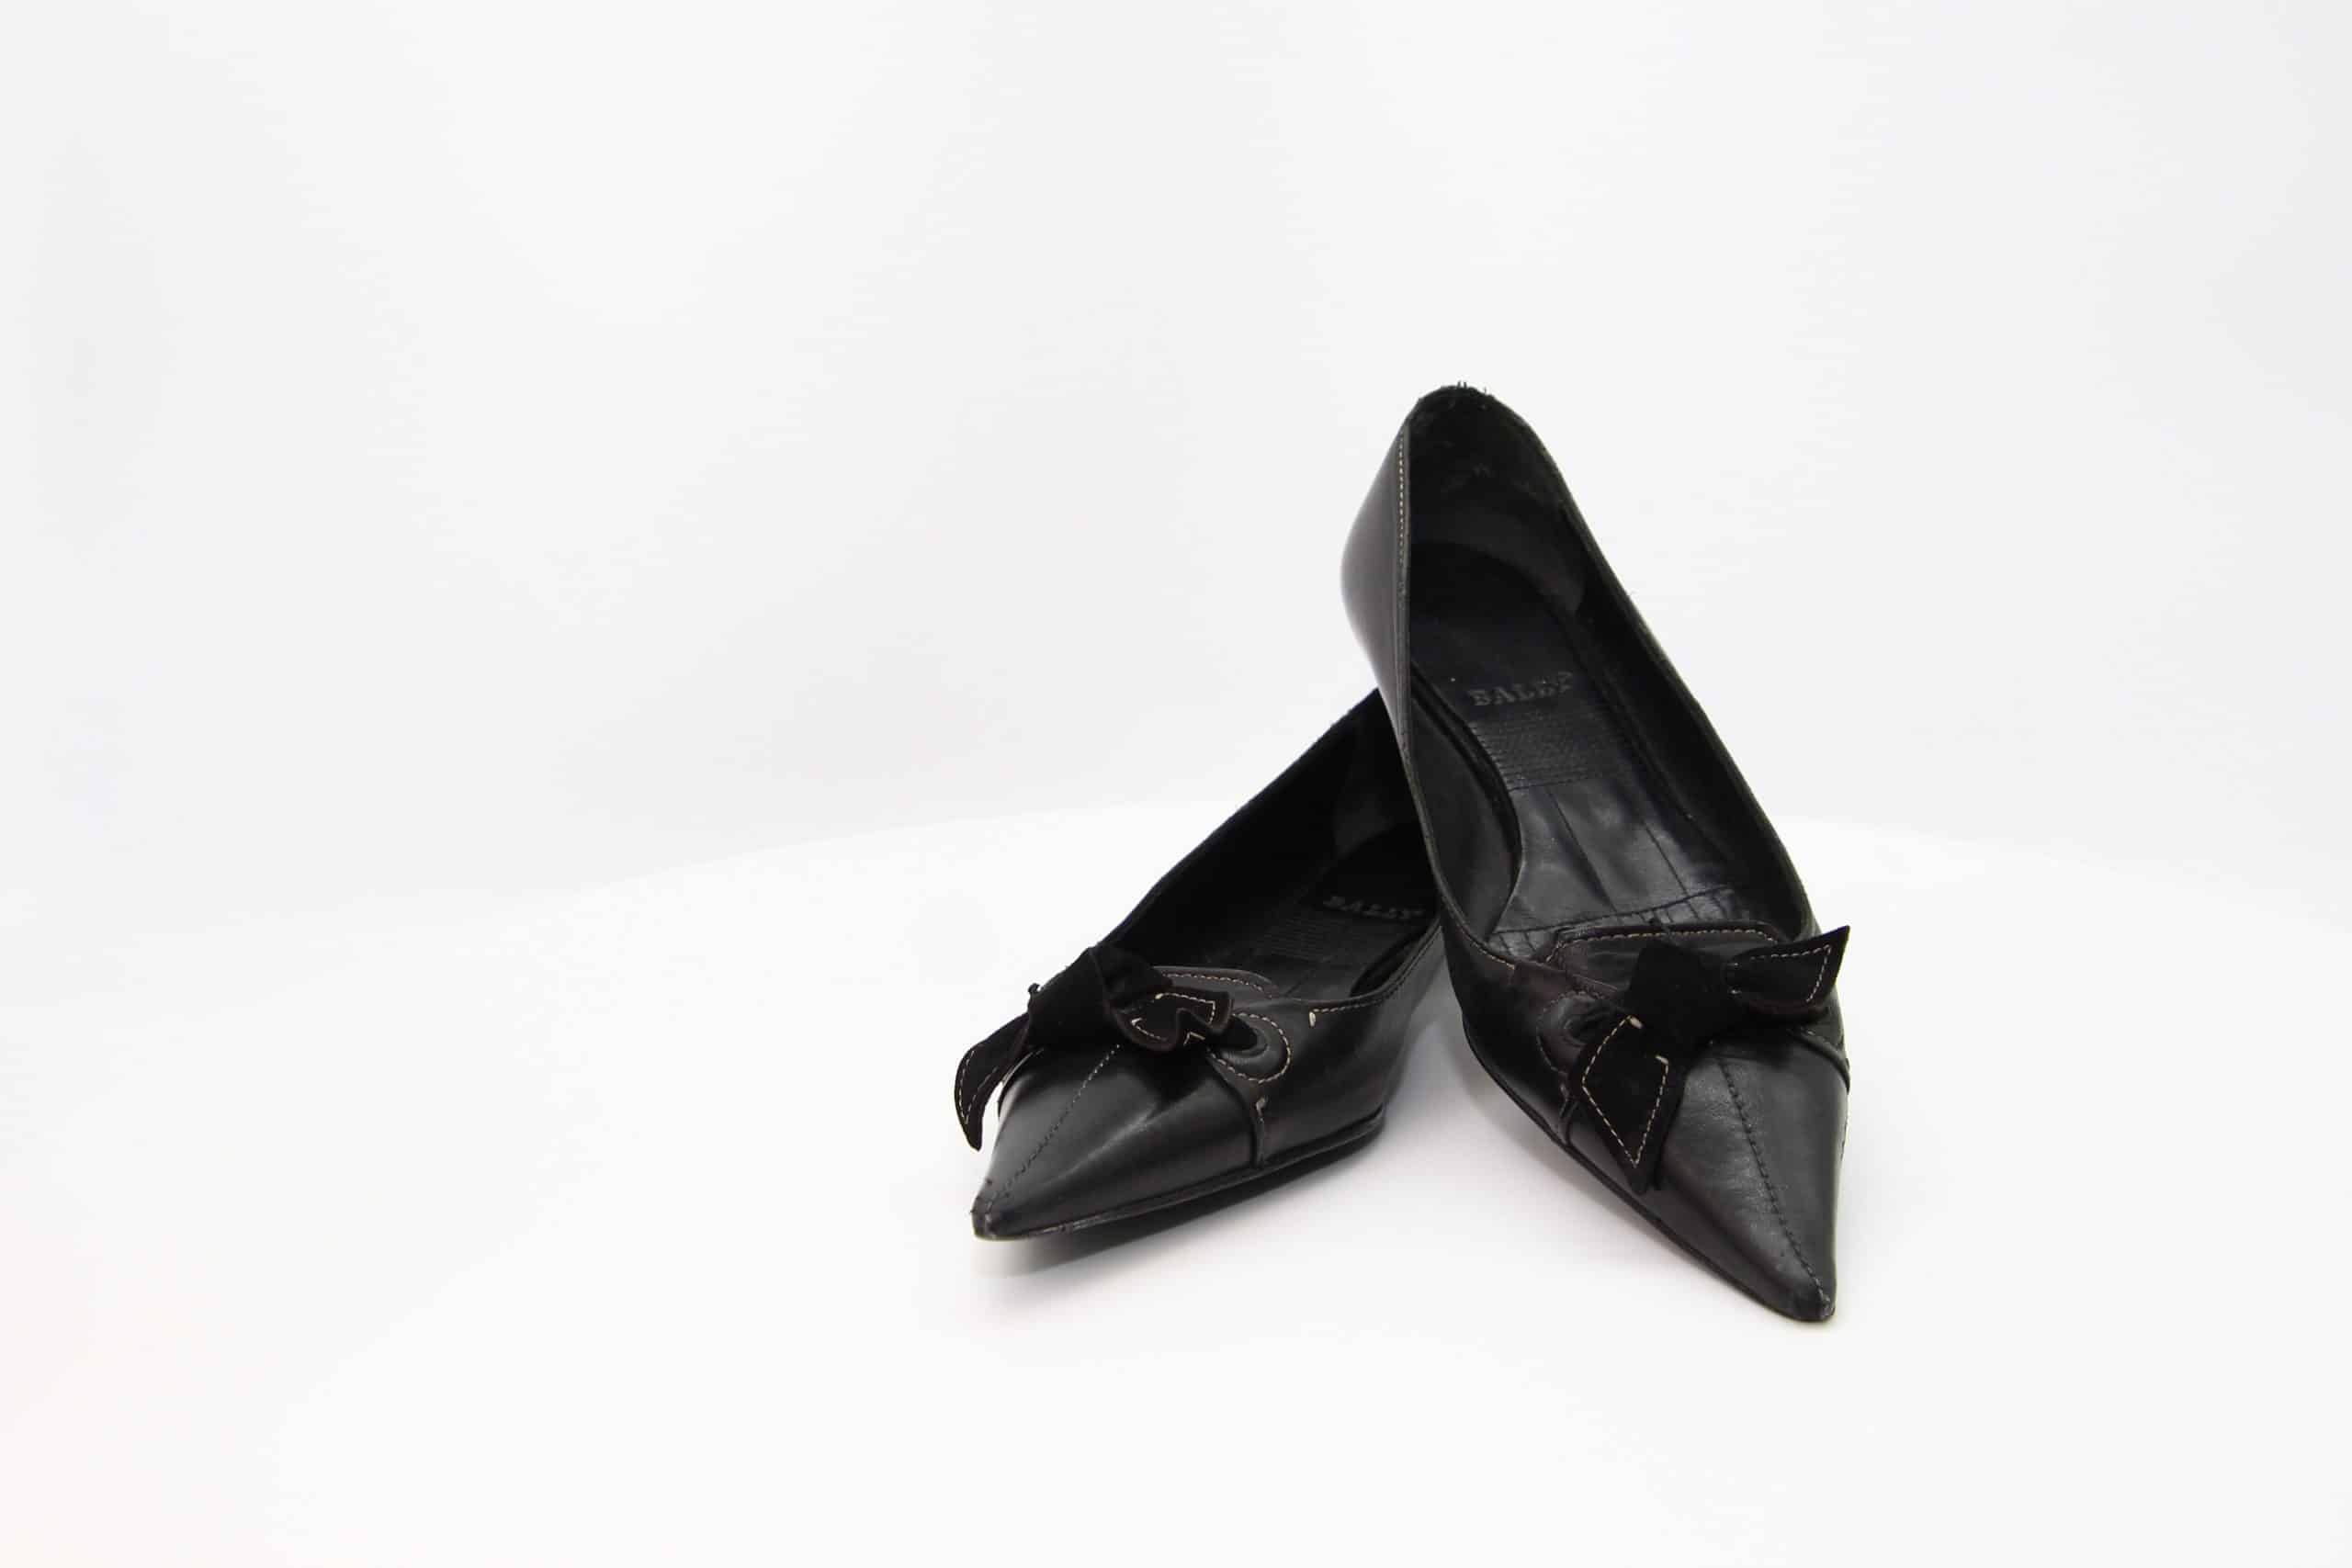 Bally Black Leather Ballet Flats